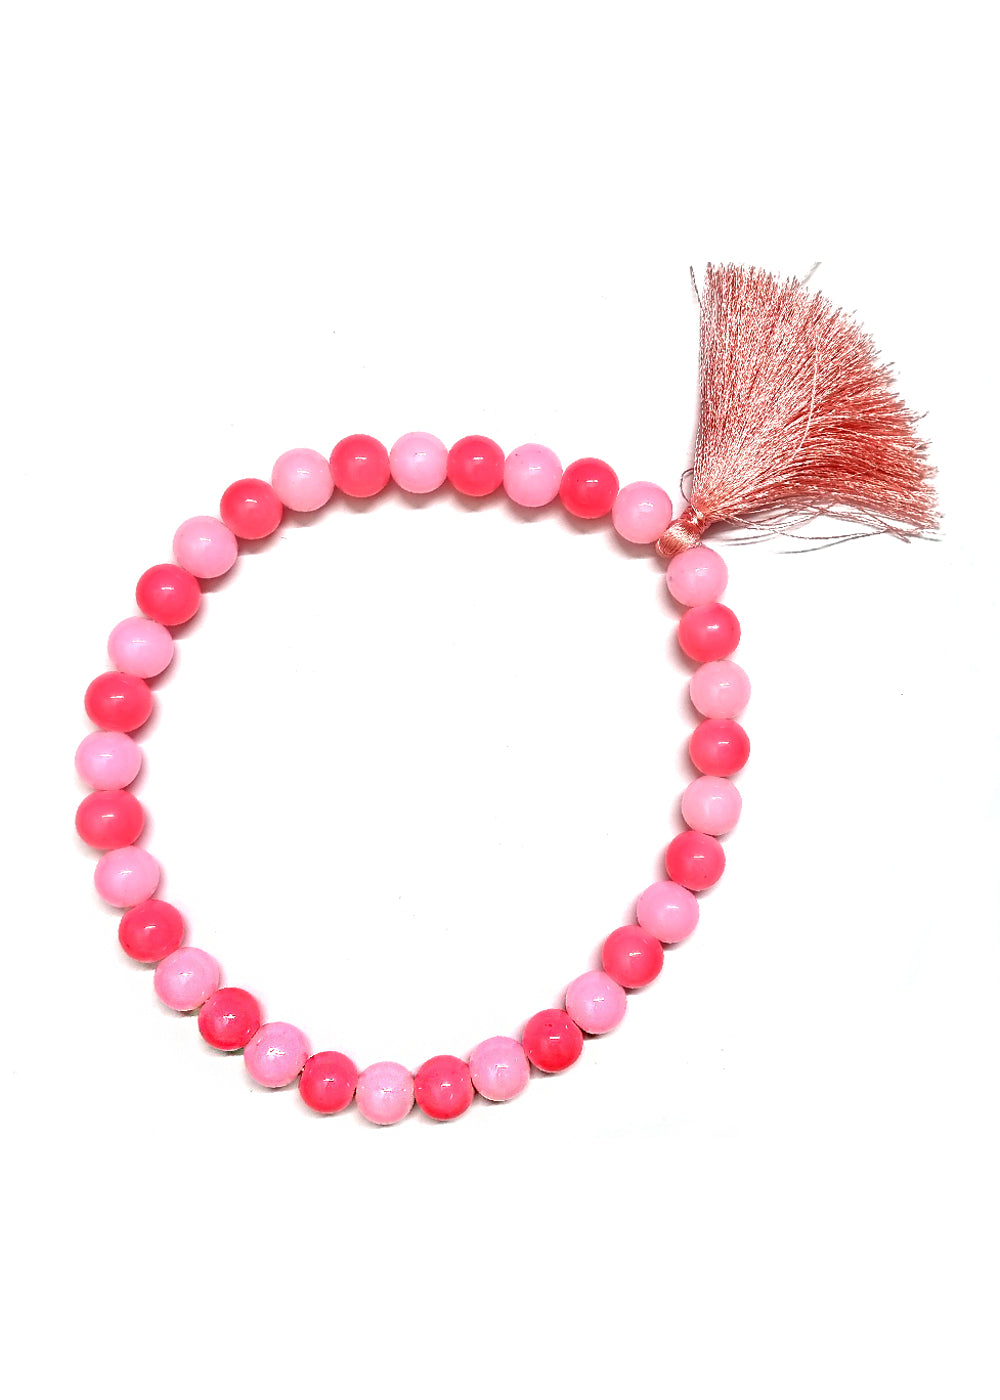 Prayer Beads - Shades of Pink